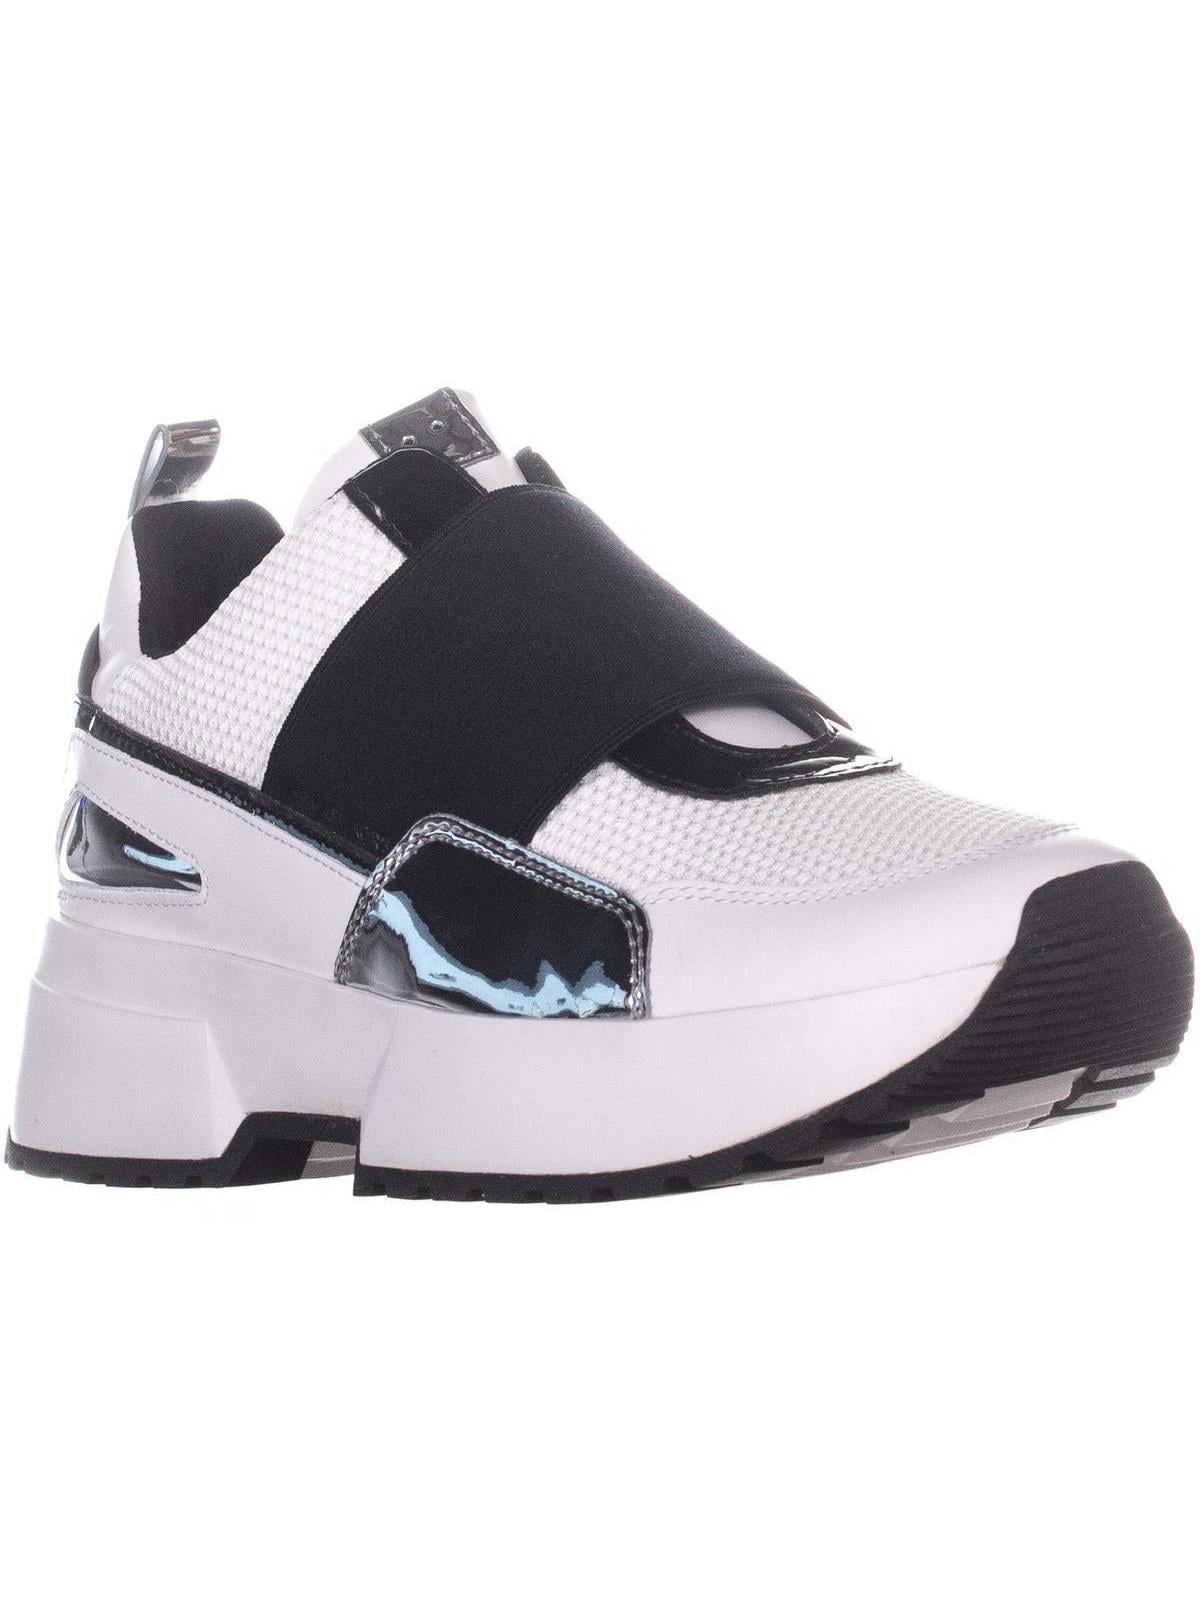 MICHAEL Michael Kors | Cosmo Knit Slip-On Sneakers black hot fix stones  6❤️❤️ | eBay